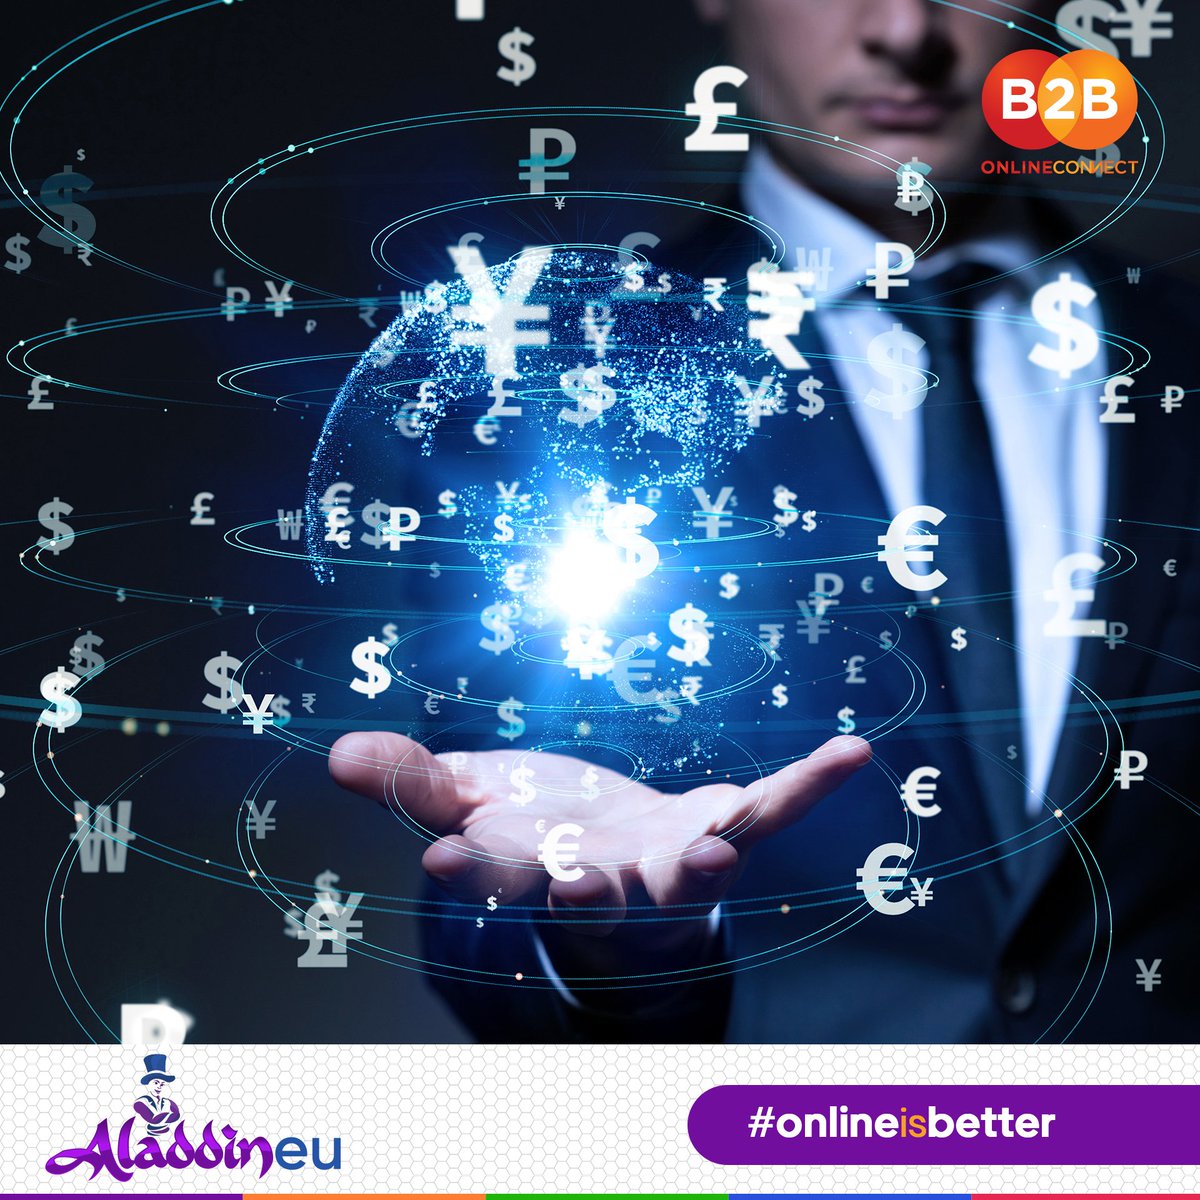 Take A Risk Or Lose a Chance.
-
Shift Your Business Online Today
-
👉👉👉aladdineu.com
-
-
#aladdineu #aladdineub2b #purplemagic #b2b #b2bmarketing #b2bplatform #sales #b2bagency #businessexpo #europe #italy #unitedkingdom #uk2020 #offer2020 #b2beurope